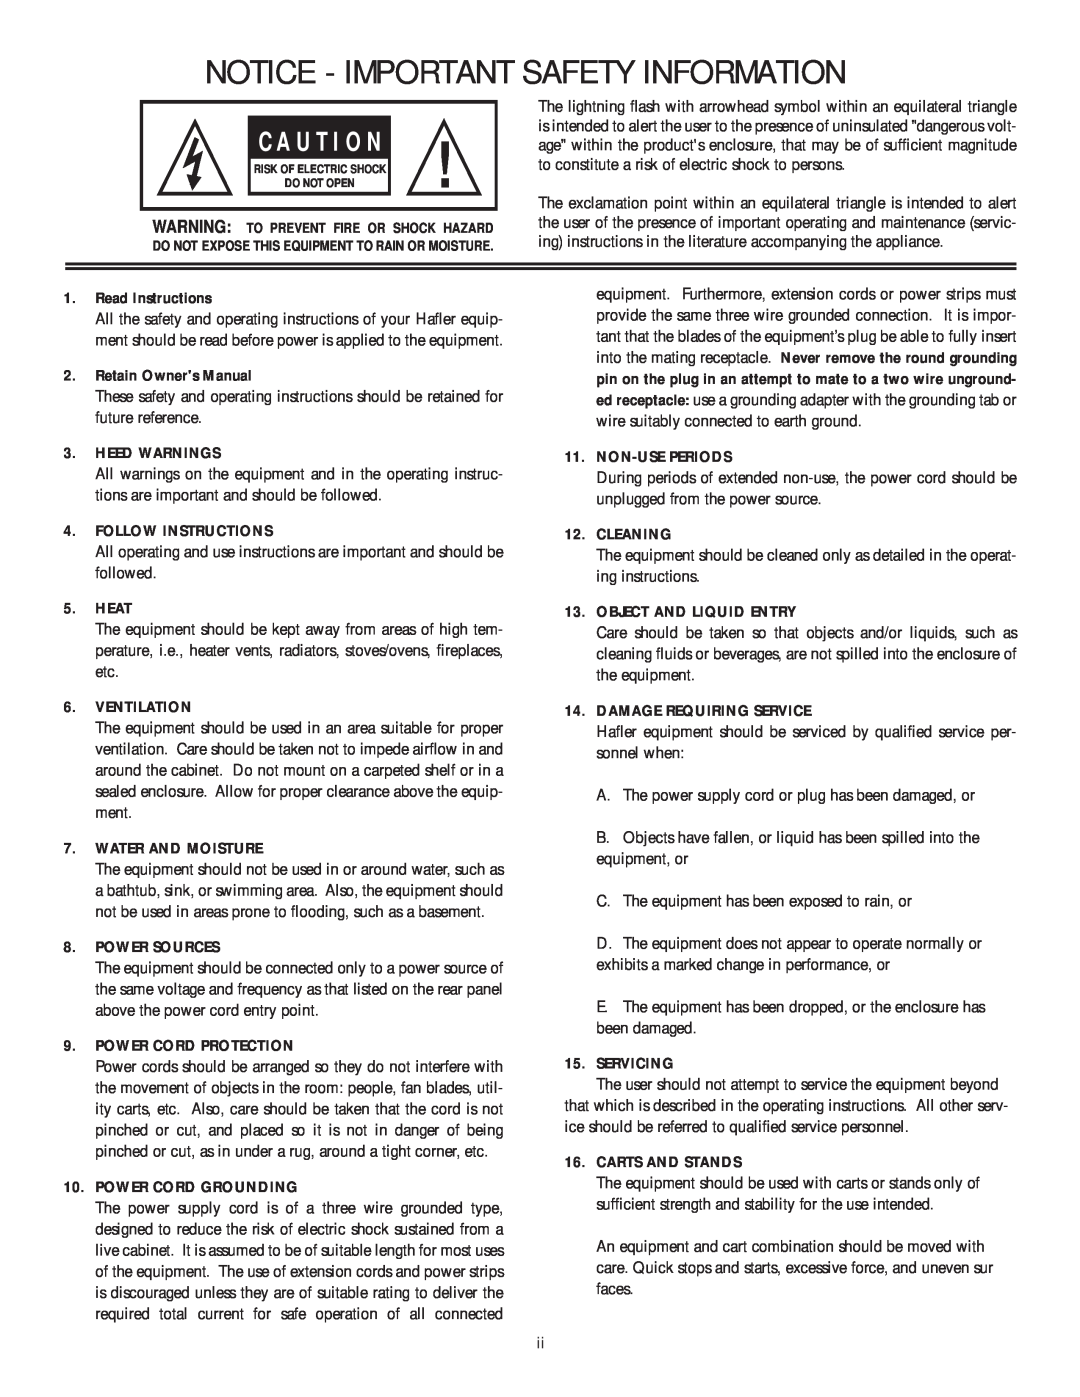 Hafler 1600, TA1100 manual C A U T I O N, Notice - Important Safety Information 